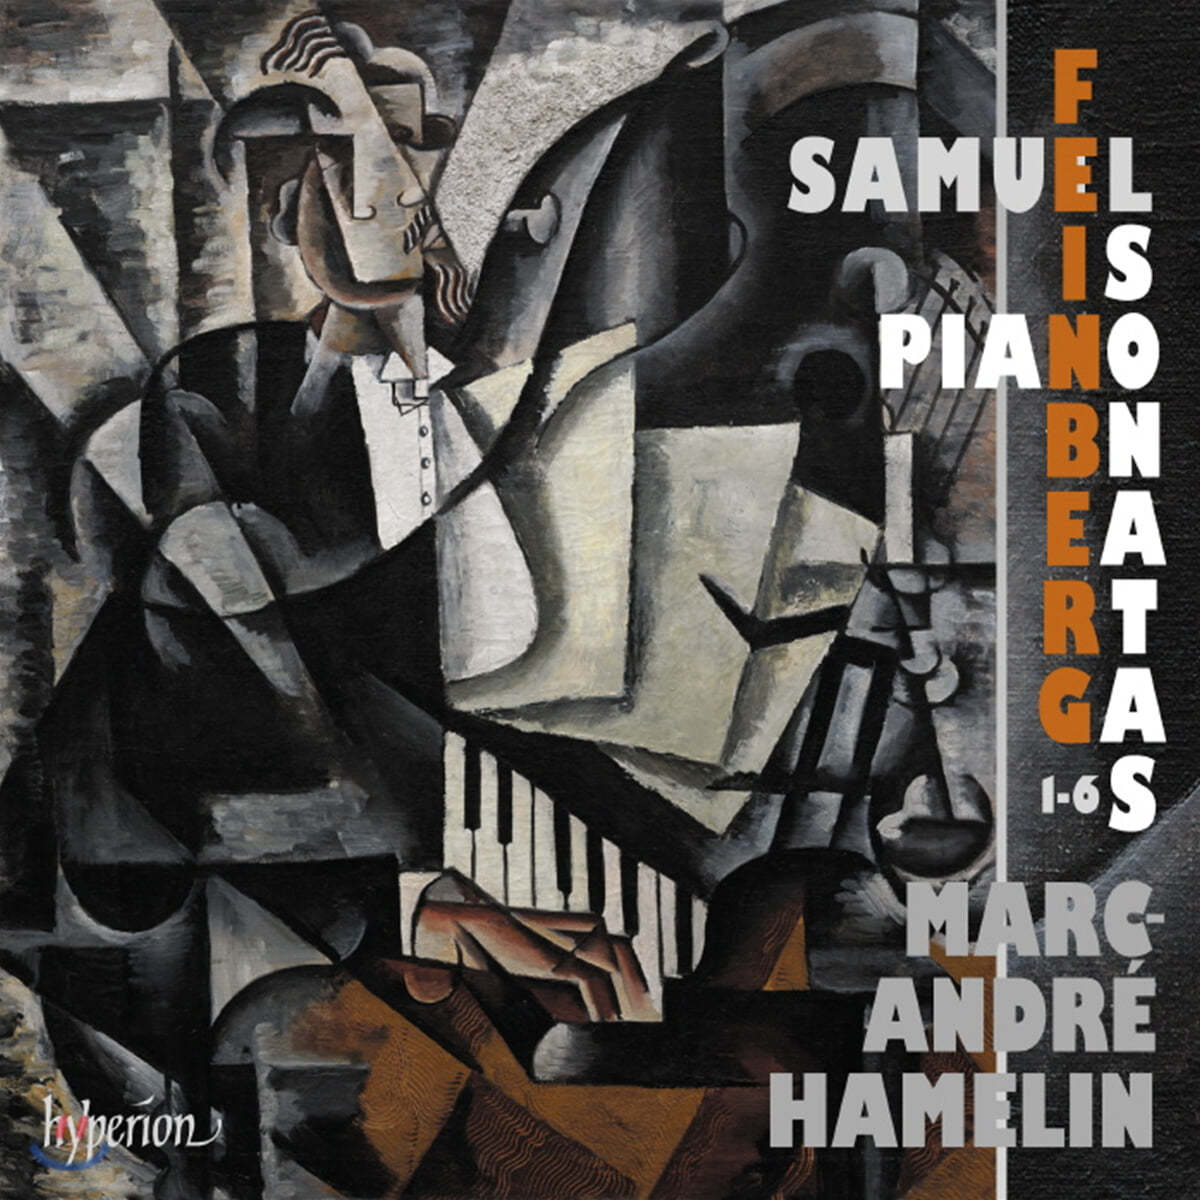 Marc-Andre Hamelin 사무일 페인베르그: 피아노 소나타 1-6번 (Samuil Feinberg: Piano Sonatas)